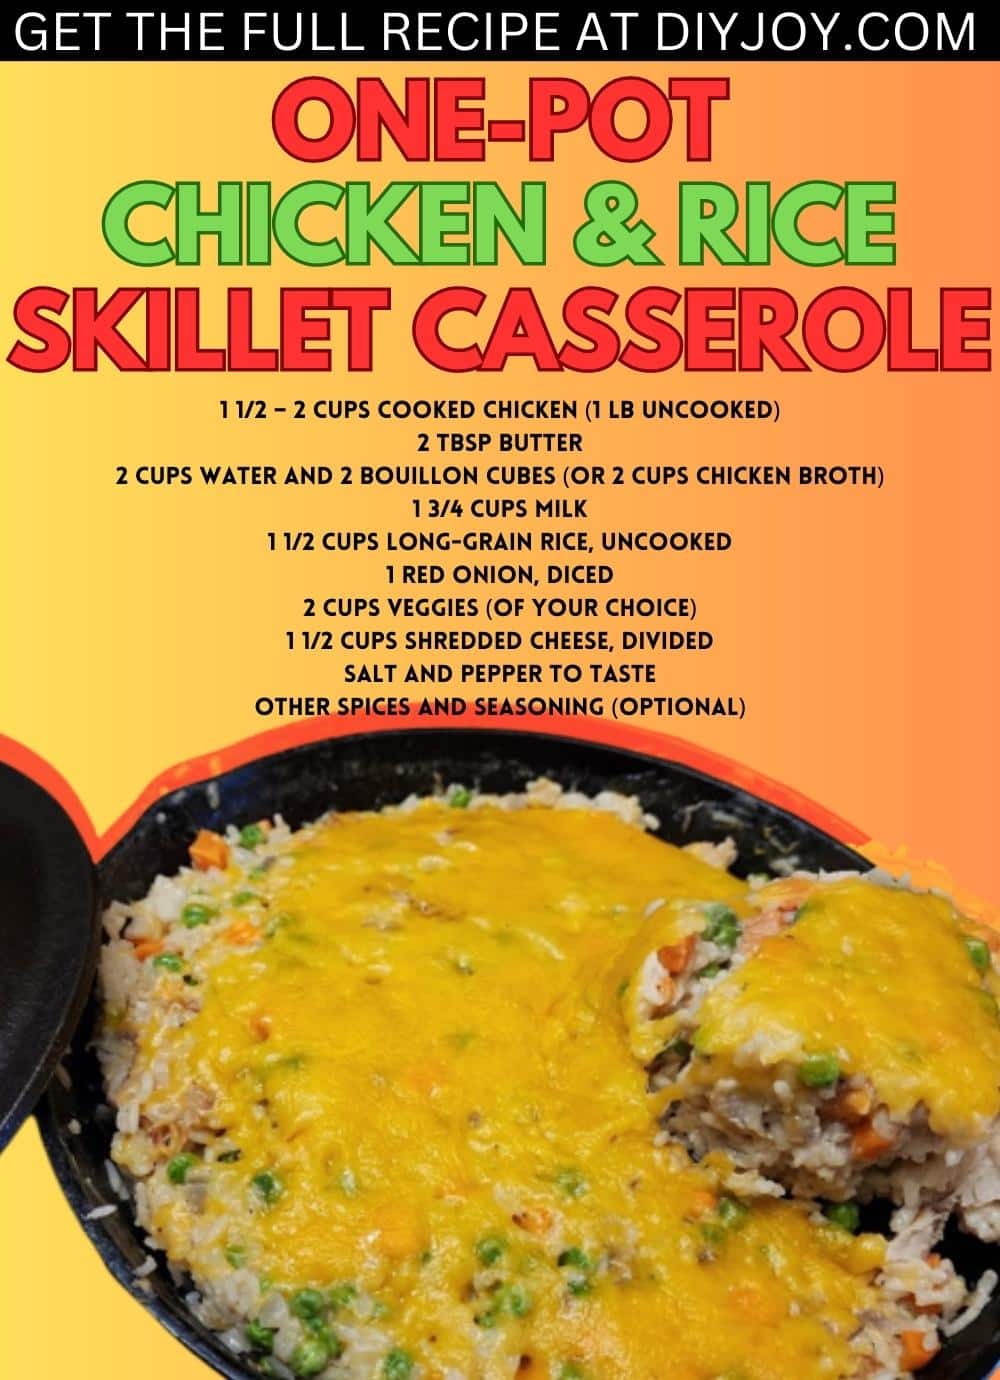 One-Pot Creamy Chicken and Rice Skillet Casserole